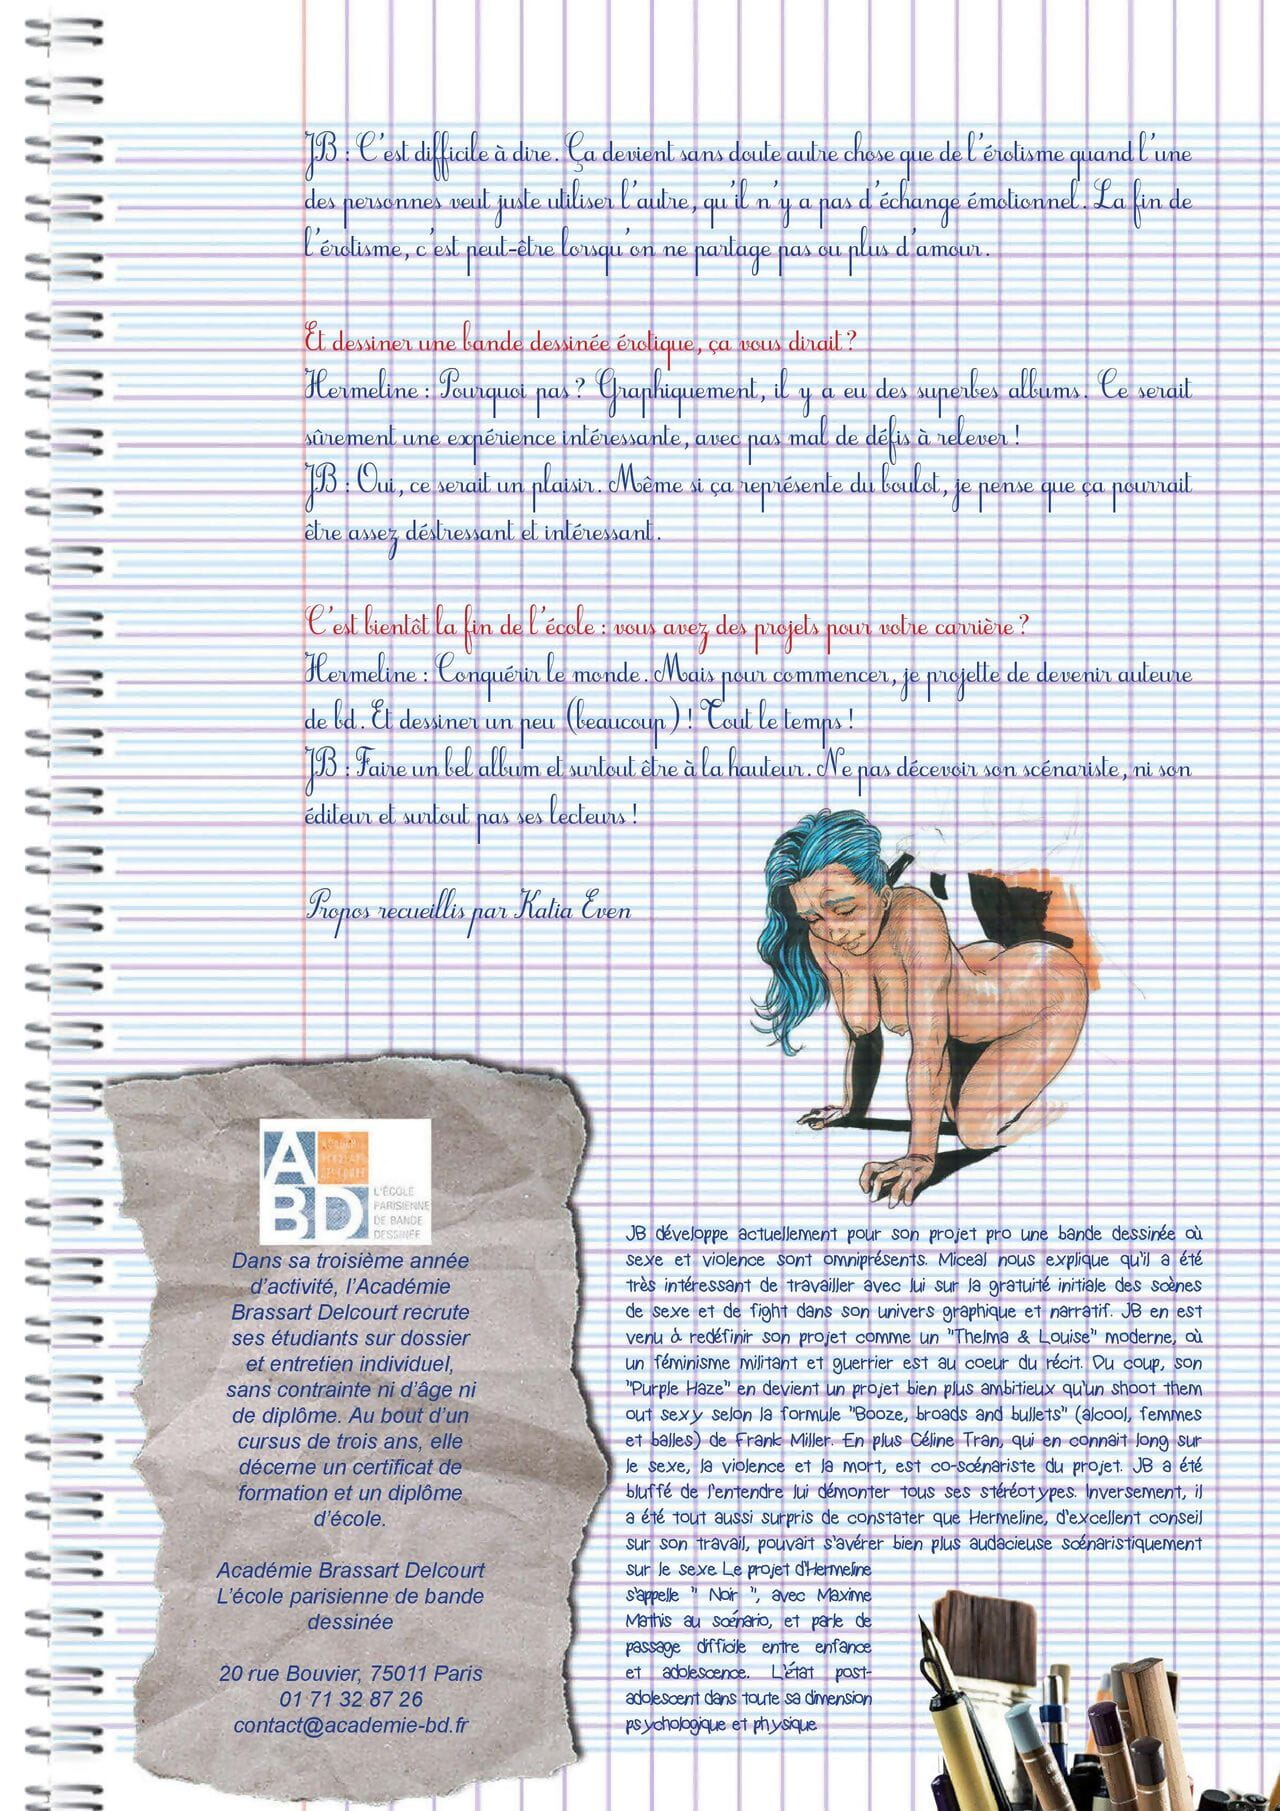 blandice 02 Ле romantisme данс ла БД page 1